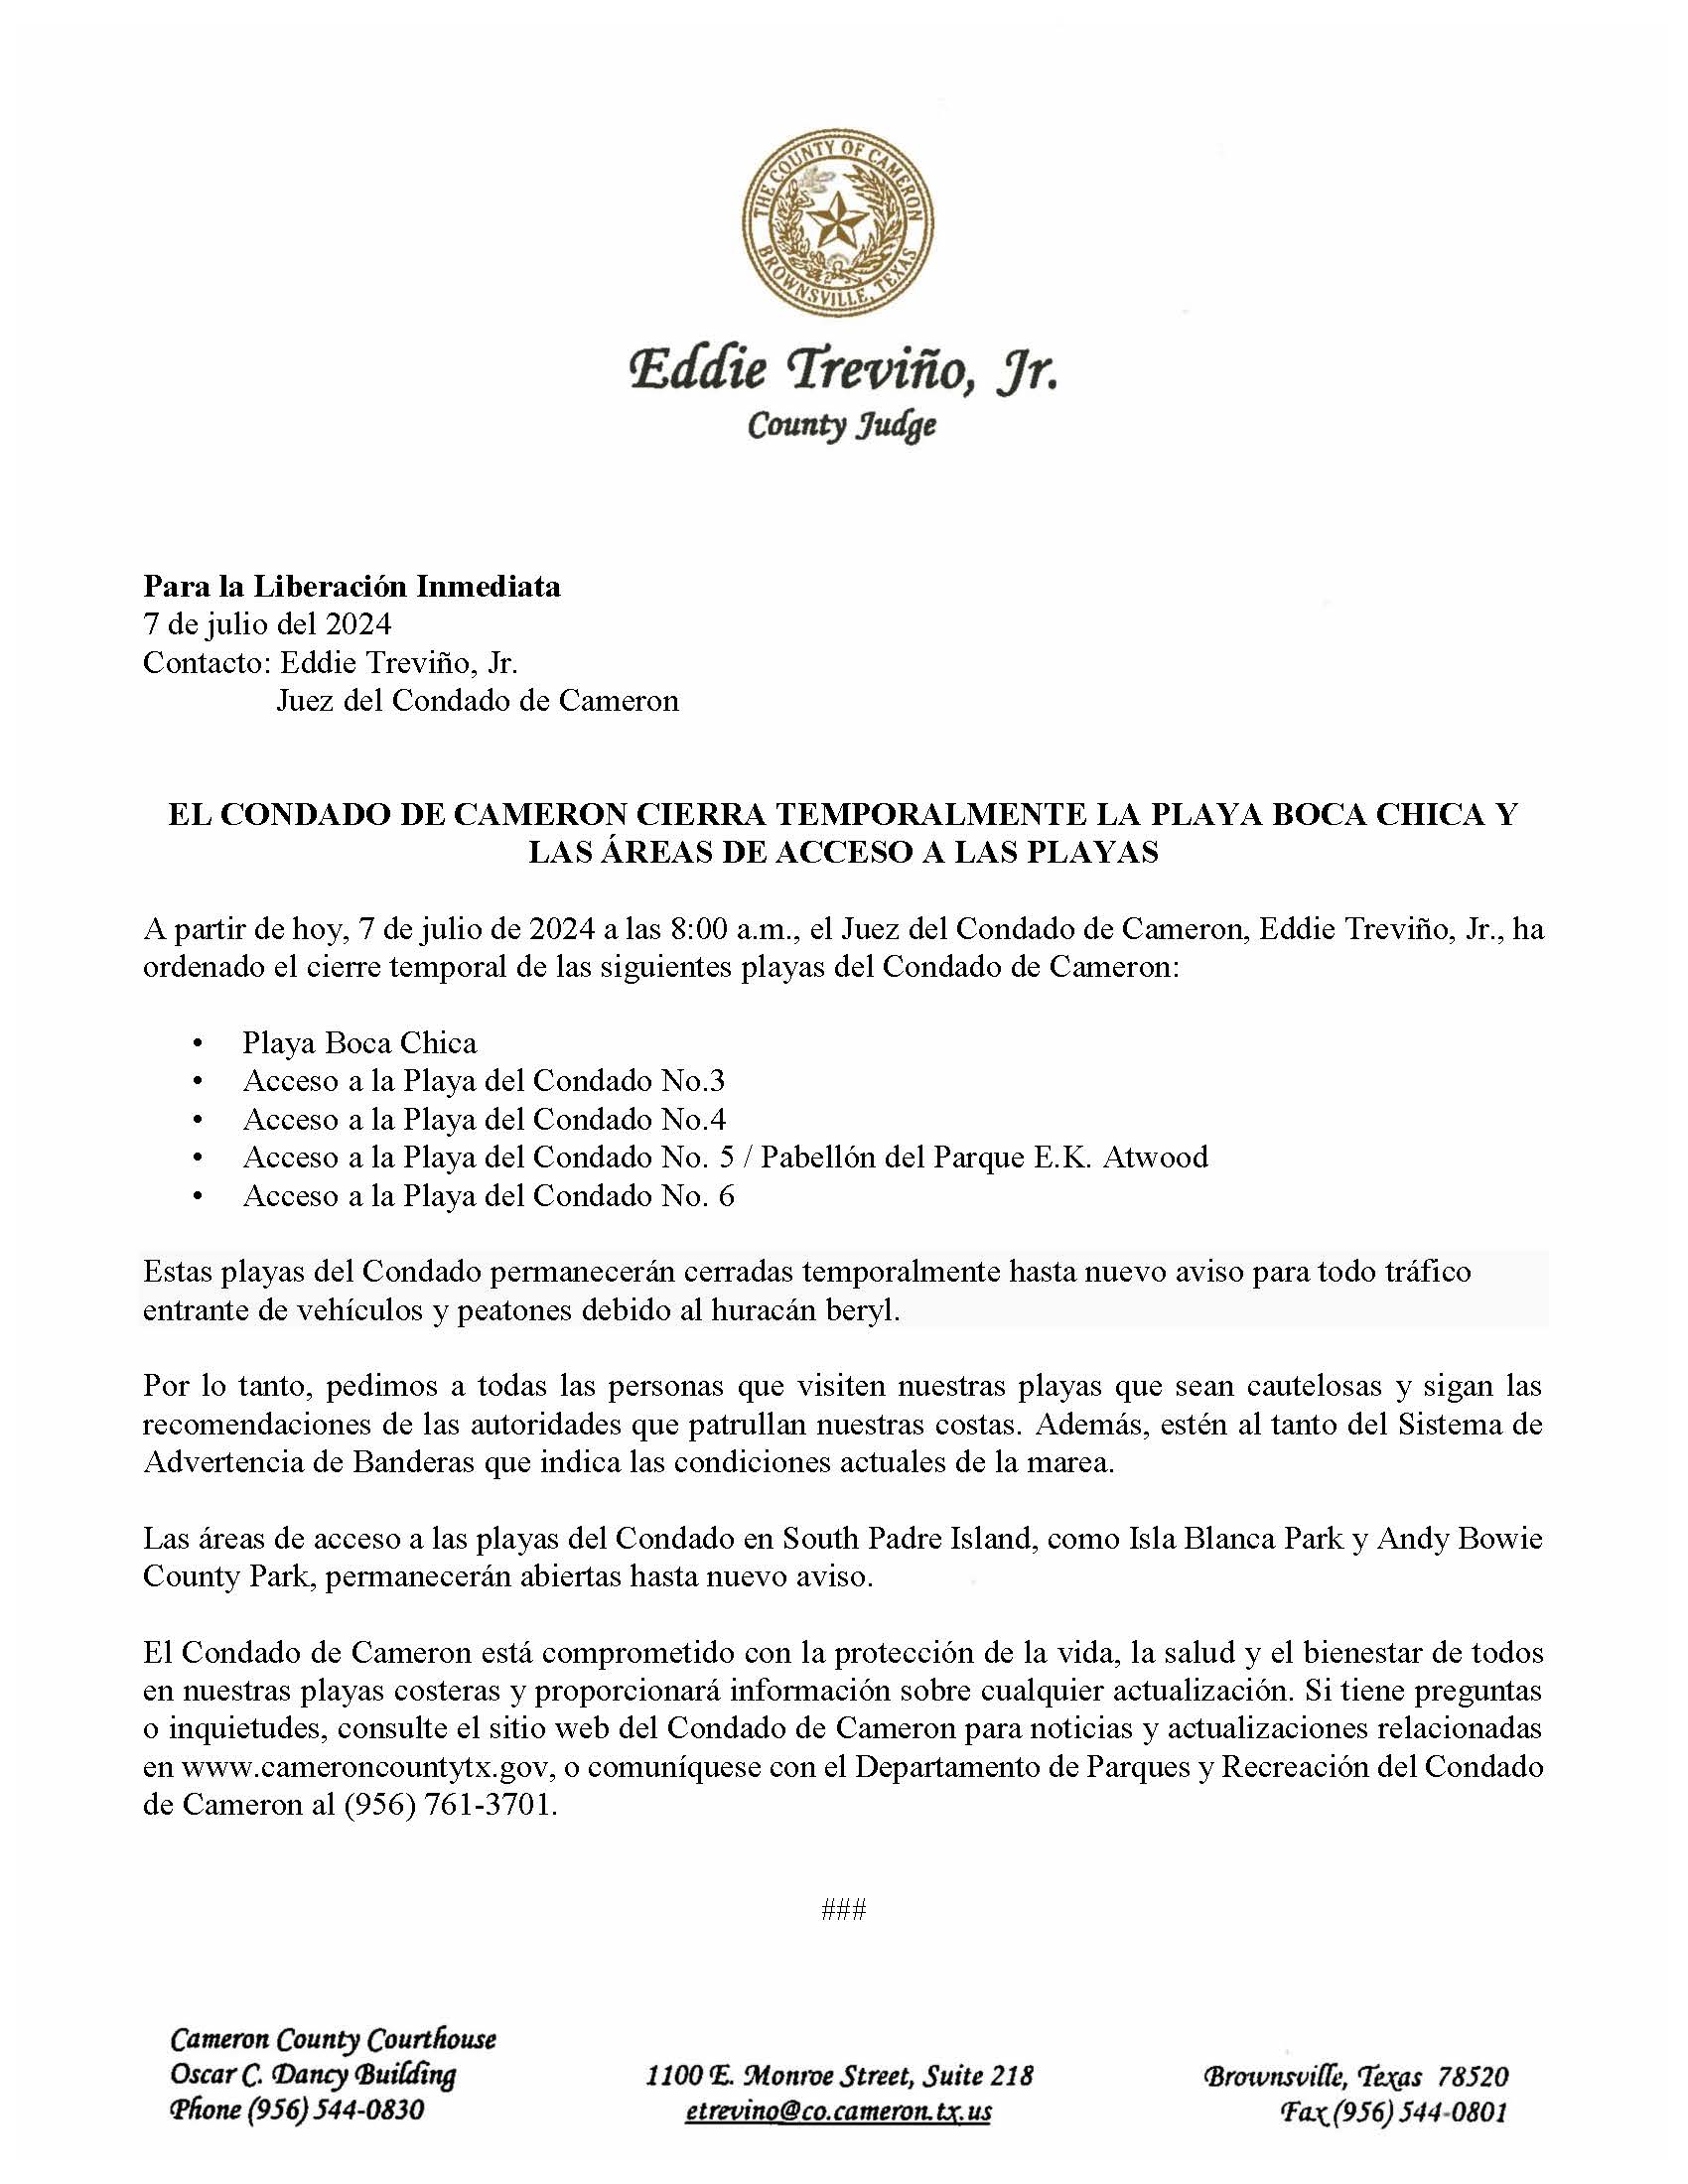 Press Release  Temporary Closure Of County Beach Access Areas 7 7 24 ESP 002